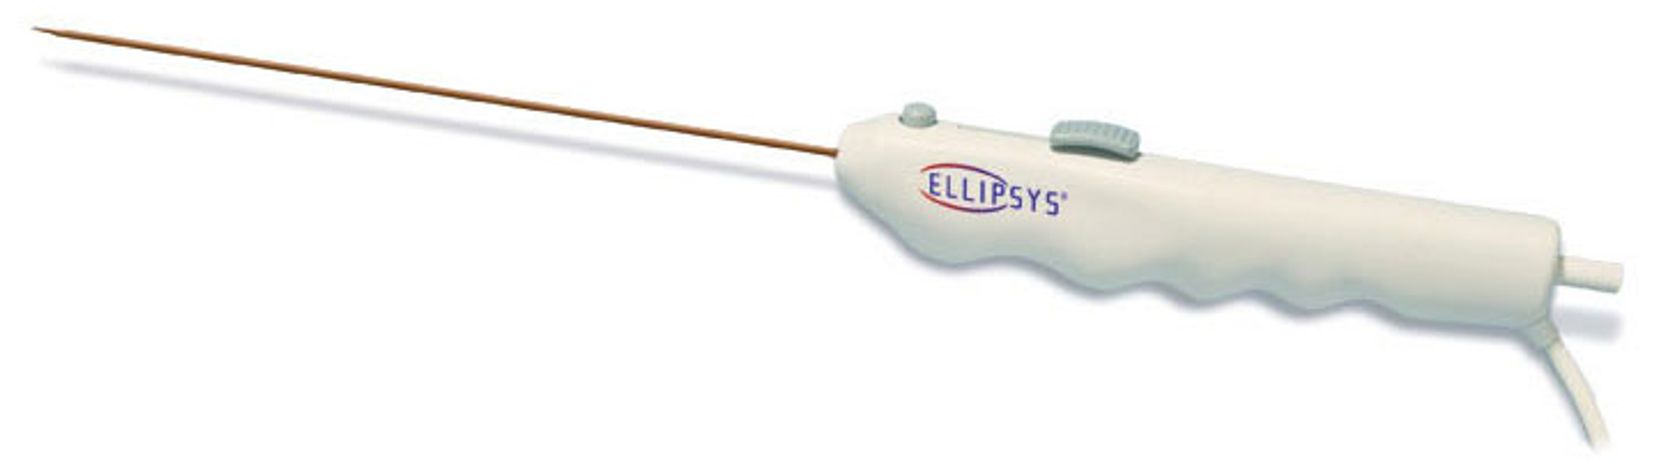 Ellipsys - Vascular Access System